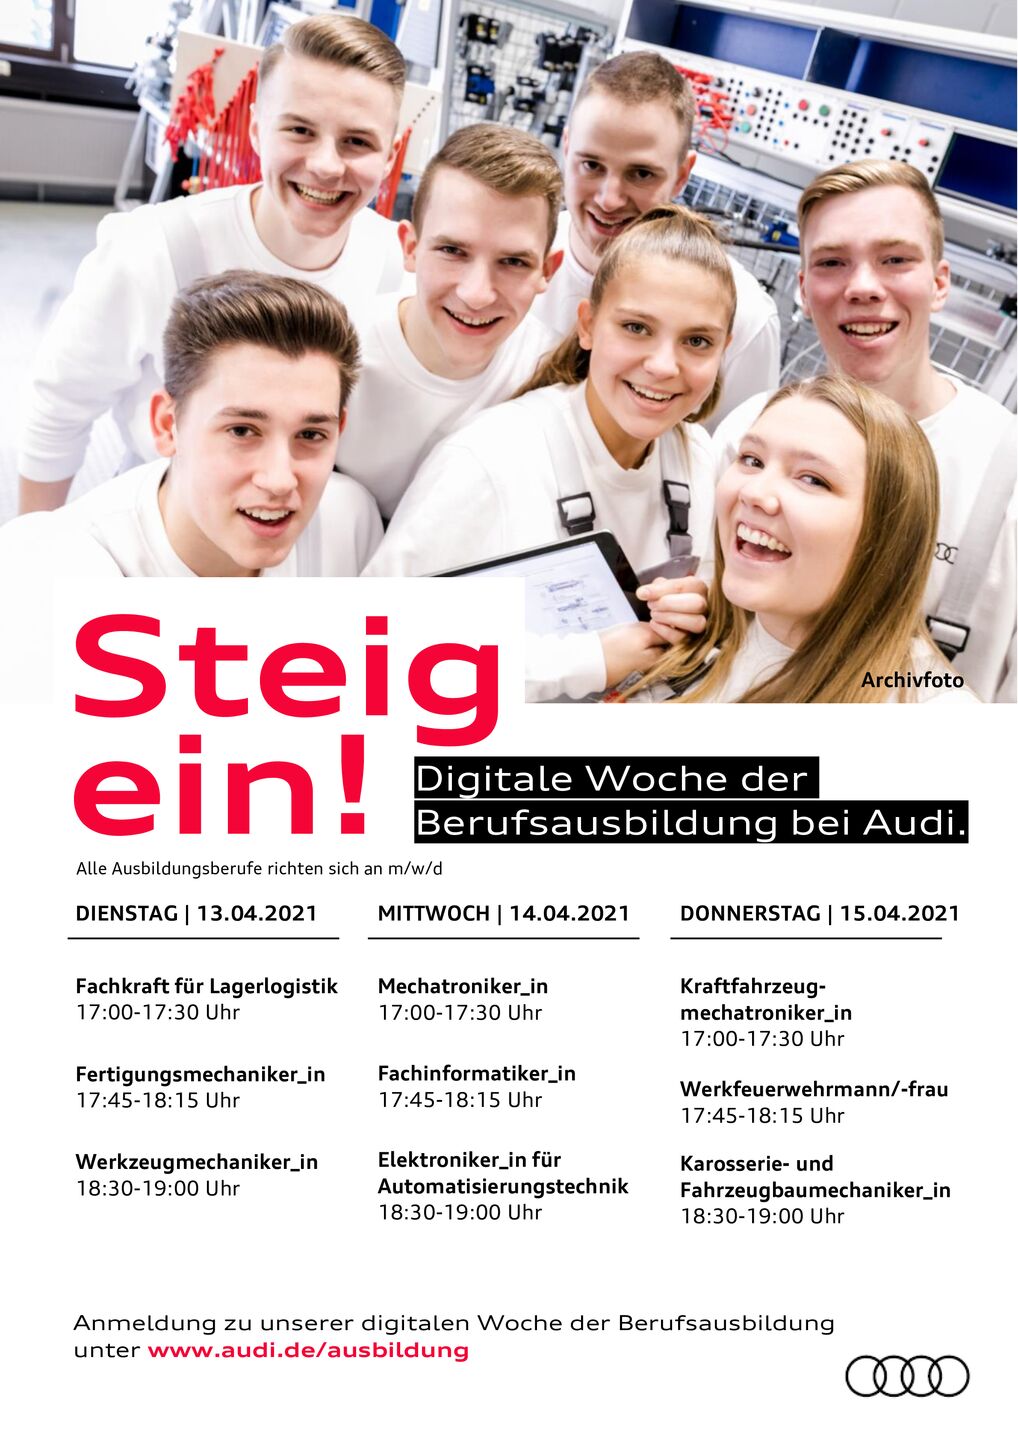 Dates for the digital week of apprenticeships at Audi Neckarsulm.